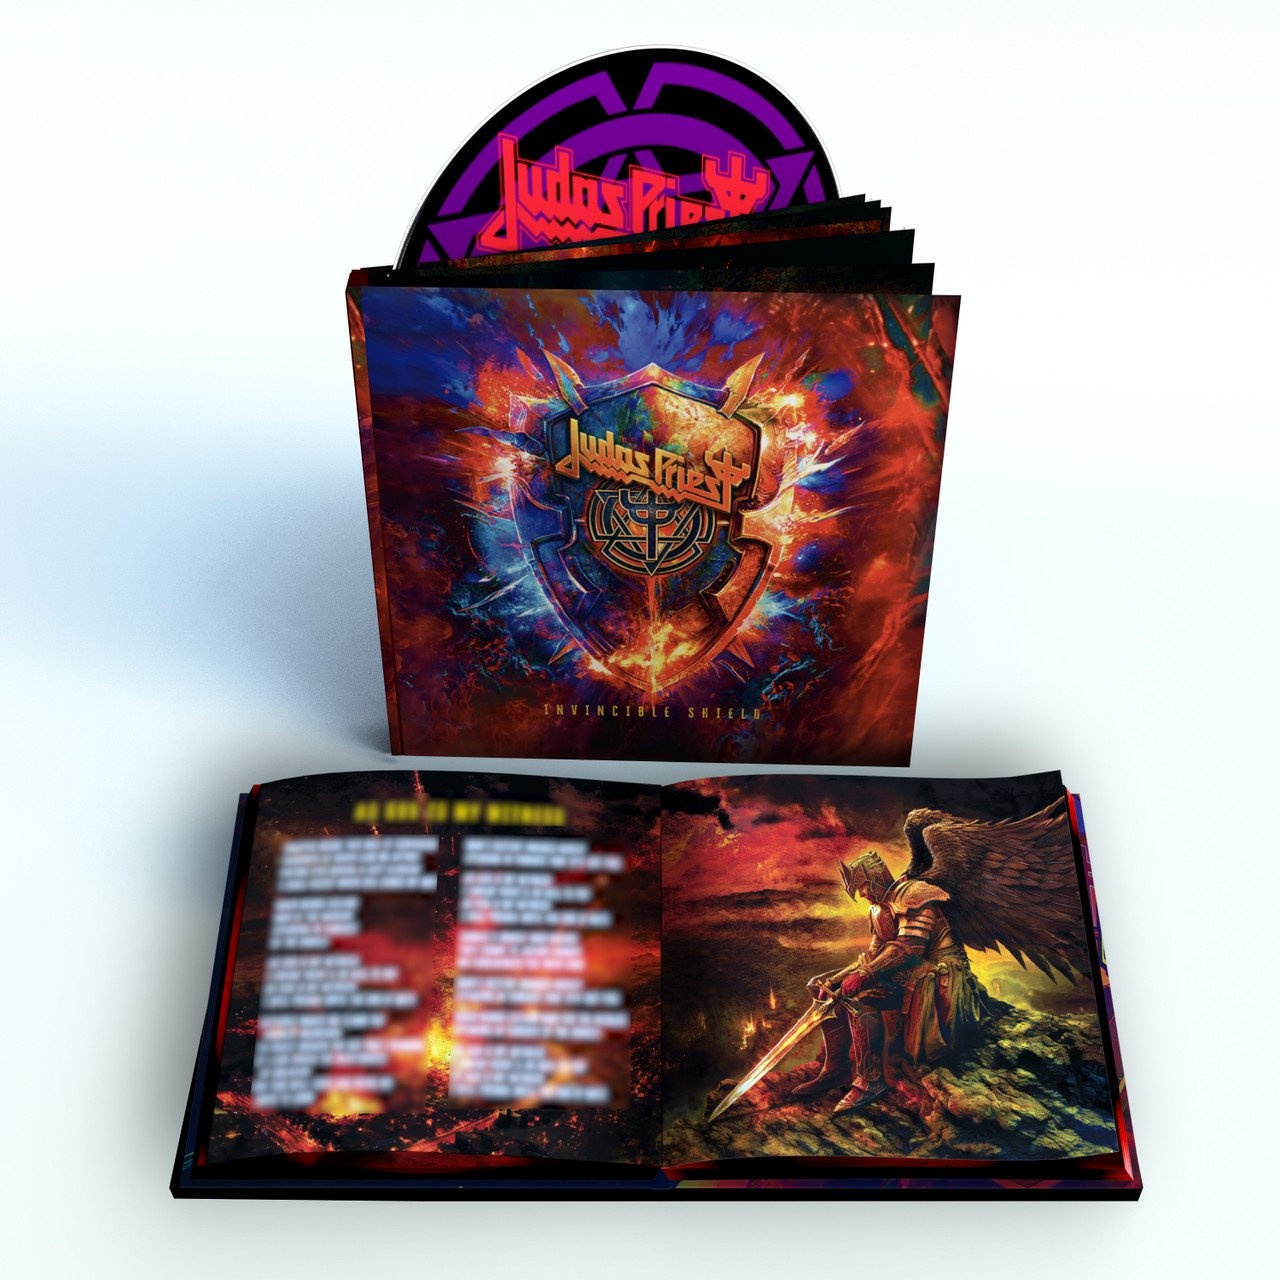 Judas Priest - Invincible Shield (Deluxe Edition) (2024). Judas Priest - Invincible Shield (2024) CD. Judas Priest - 08.03.2024 - "Invincible Shield". Judas Priest Invisible Shield распаковка.